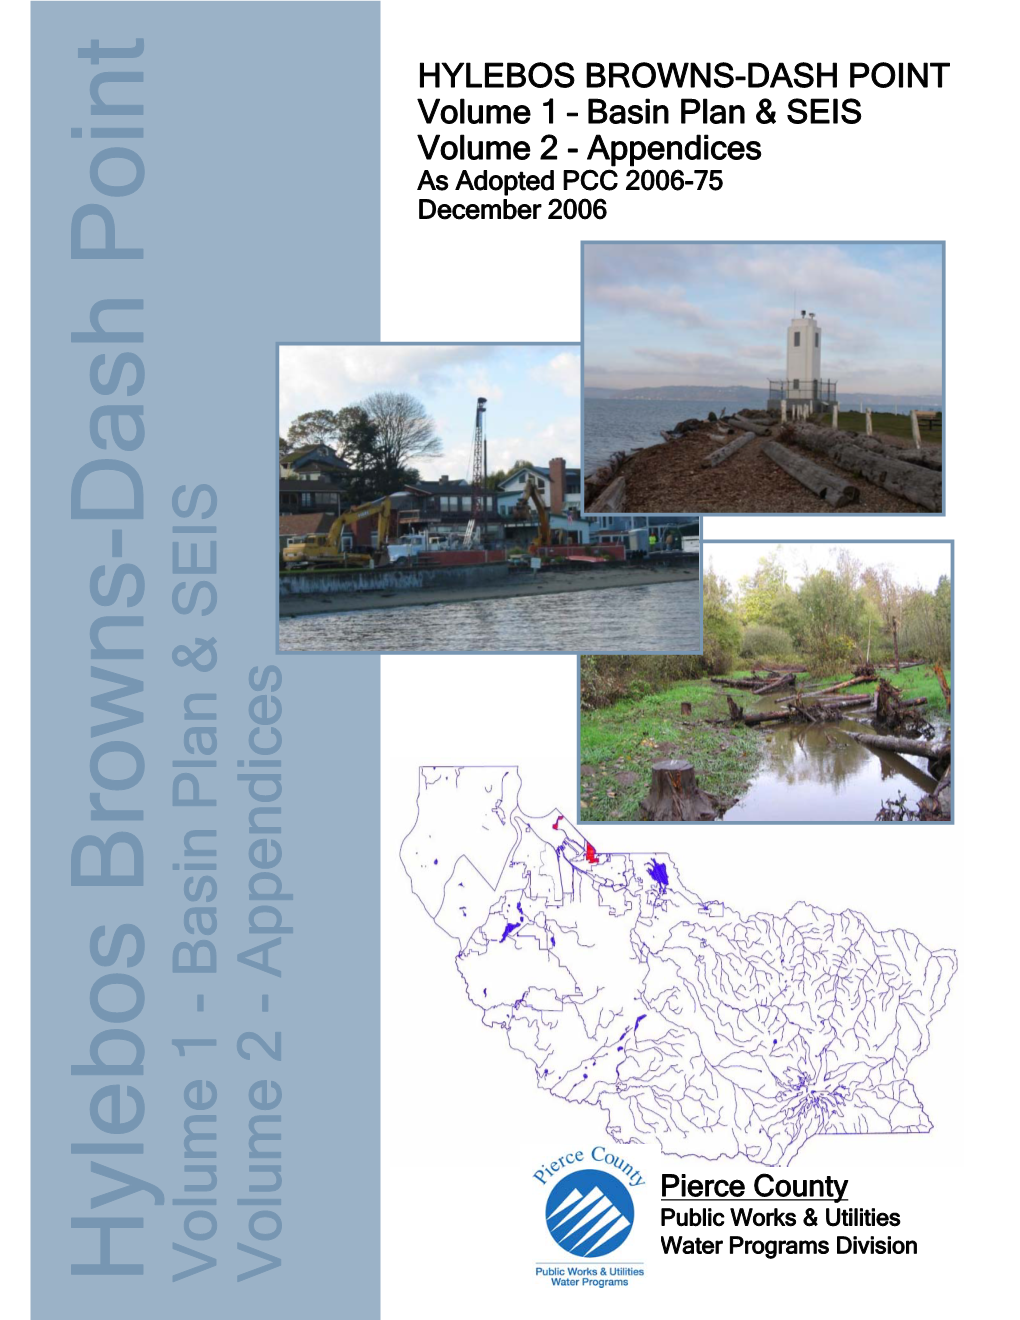 Hylebos-Browns Point-Dash Point Basin Plan